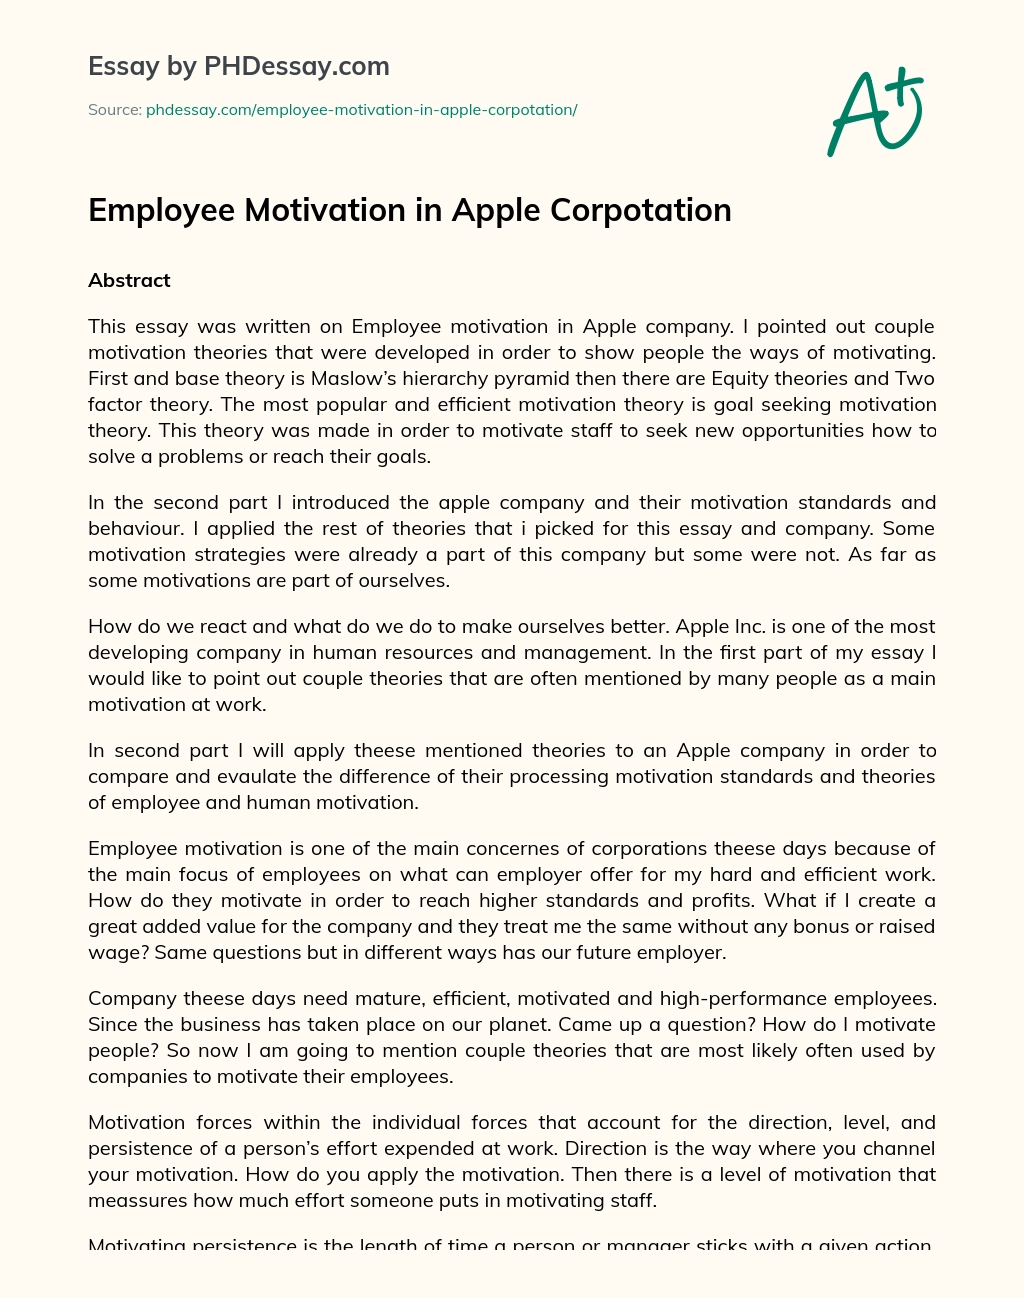 Employee Motivation in Apple Corpotation essay